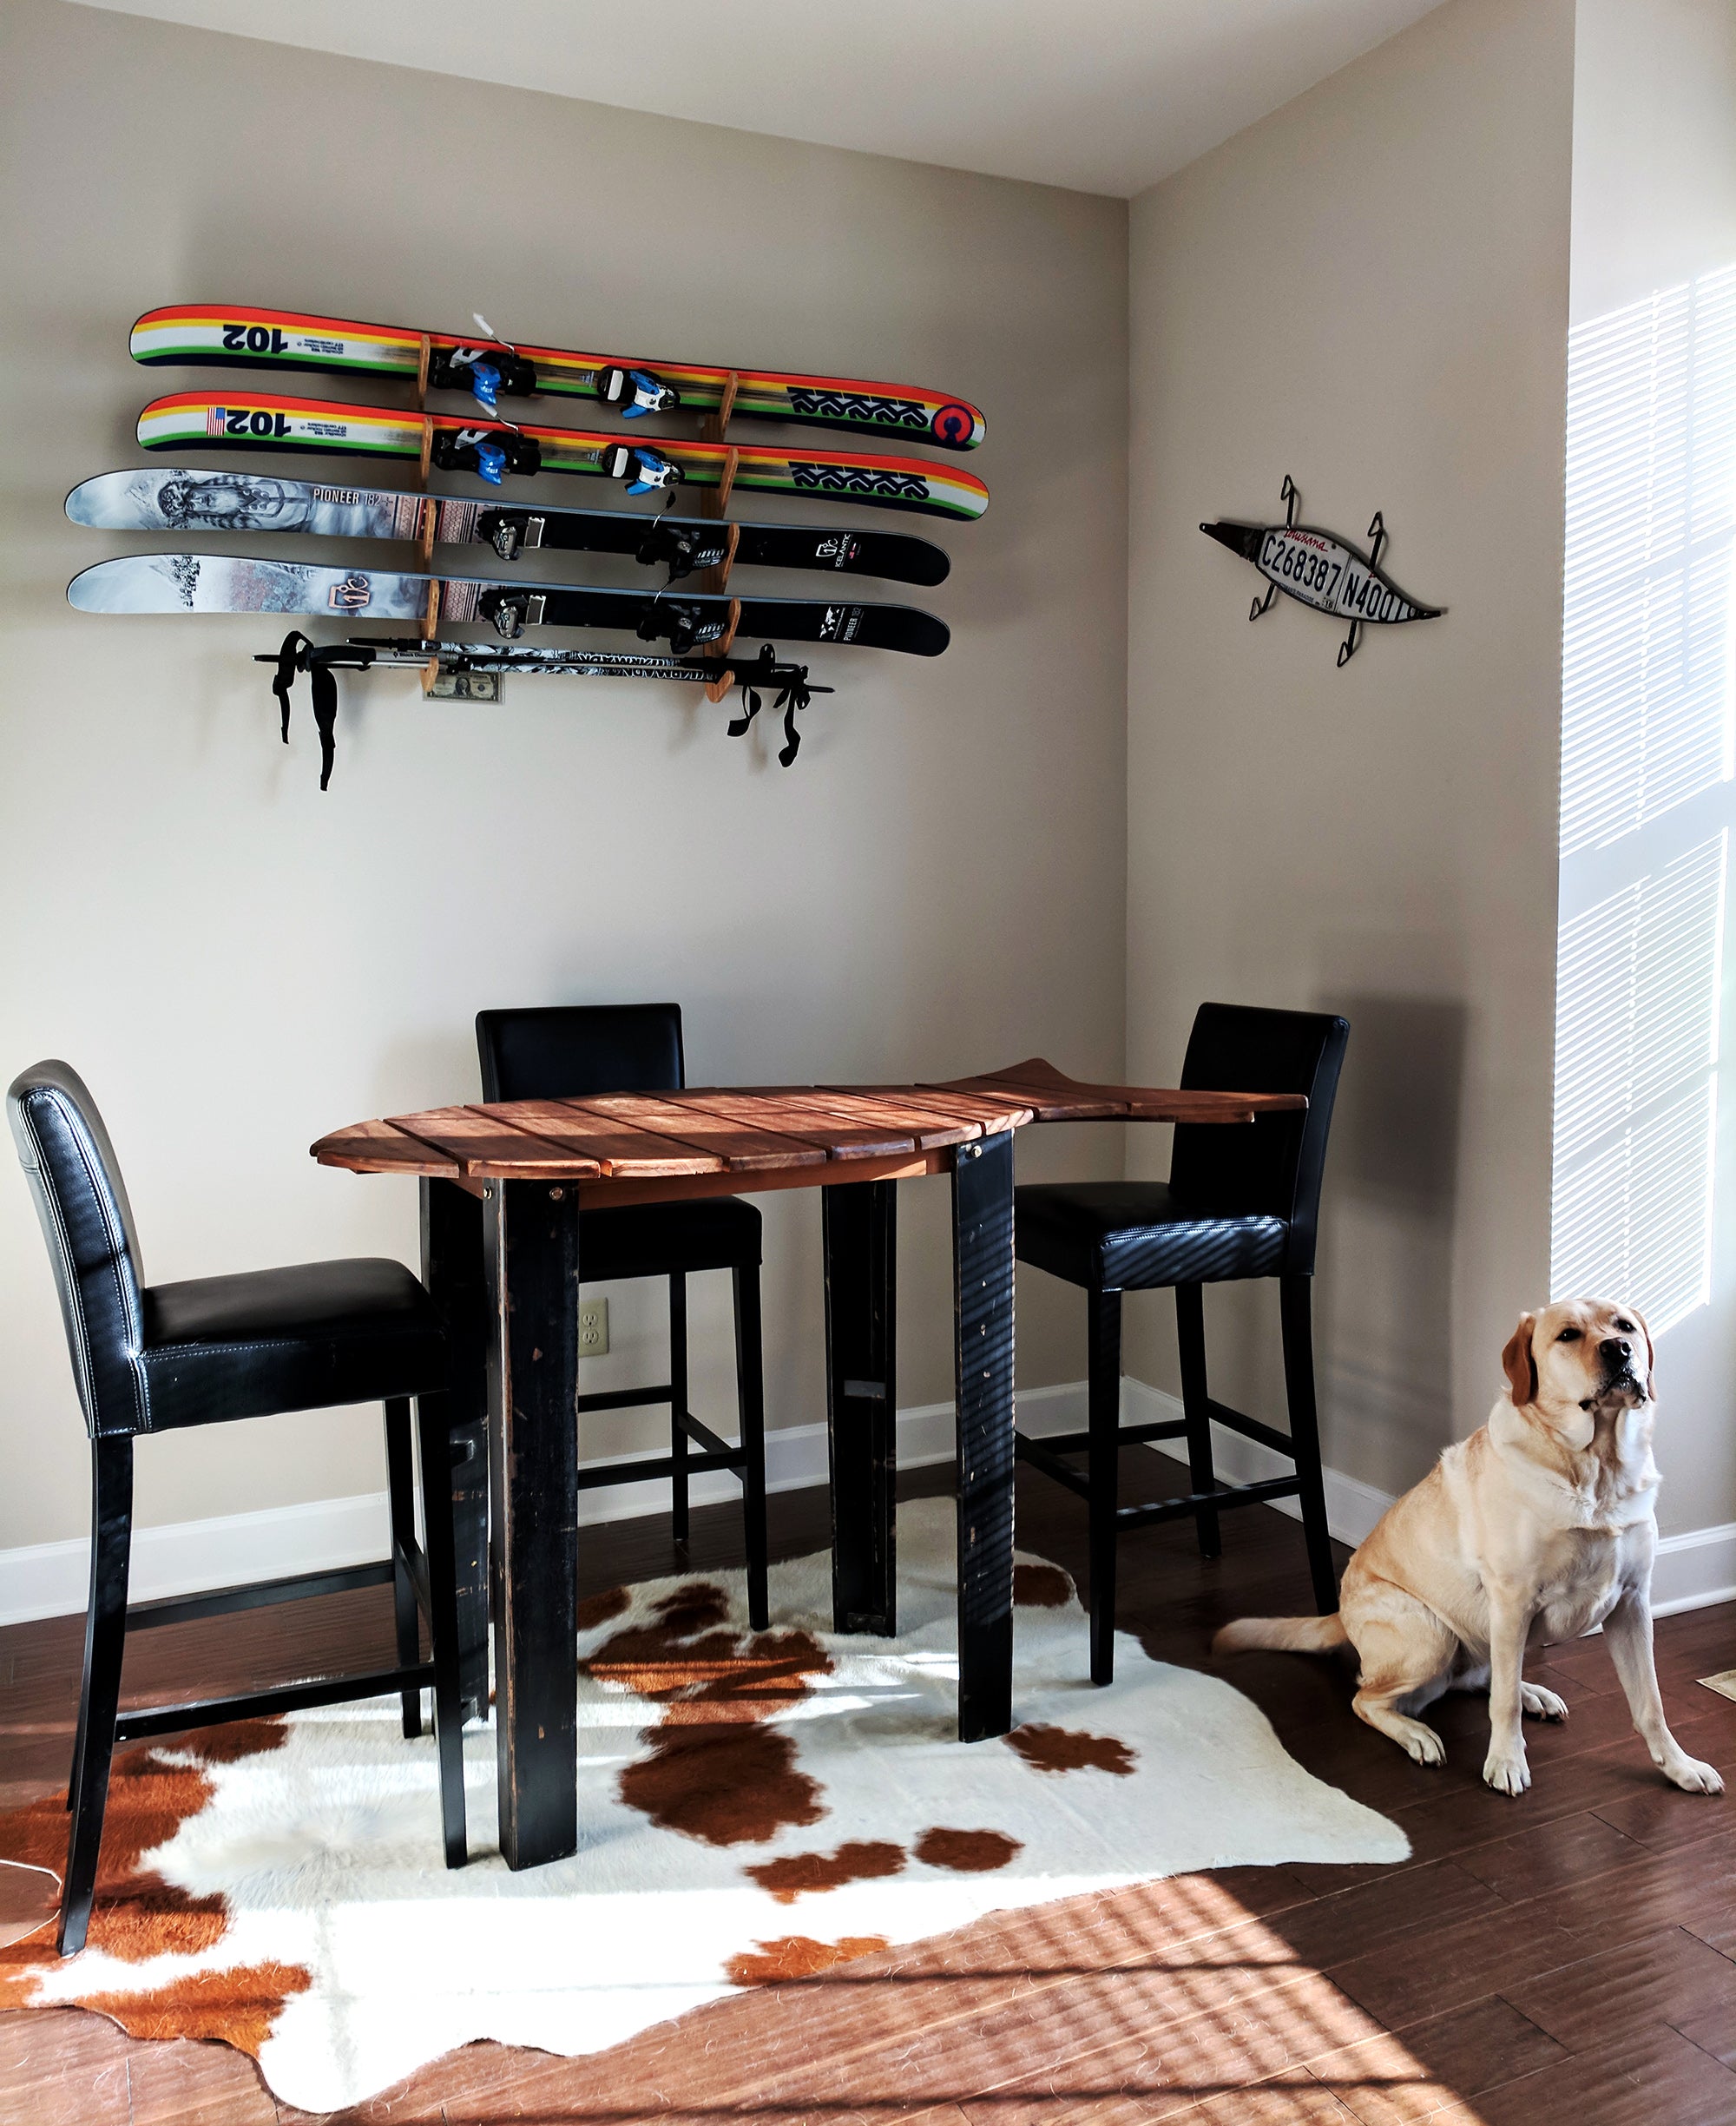 Indoor Ski Rack for Wall - Ski Art Home Decor